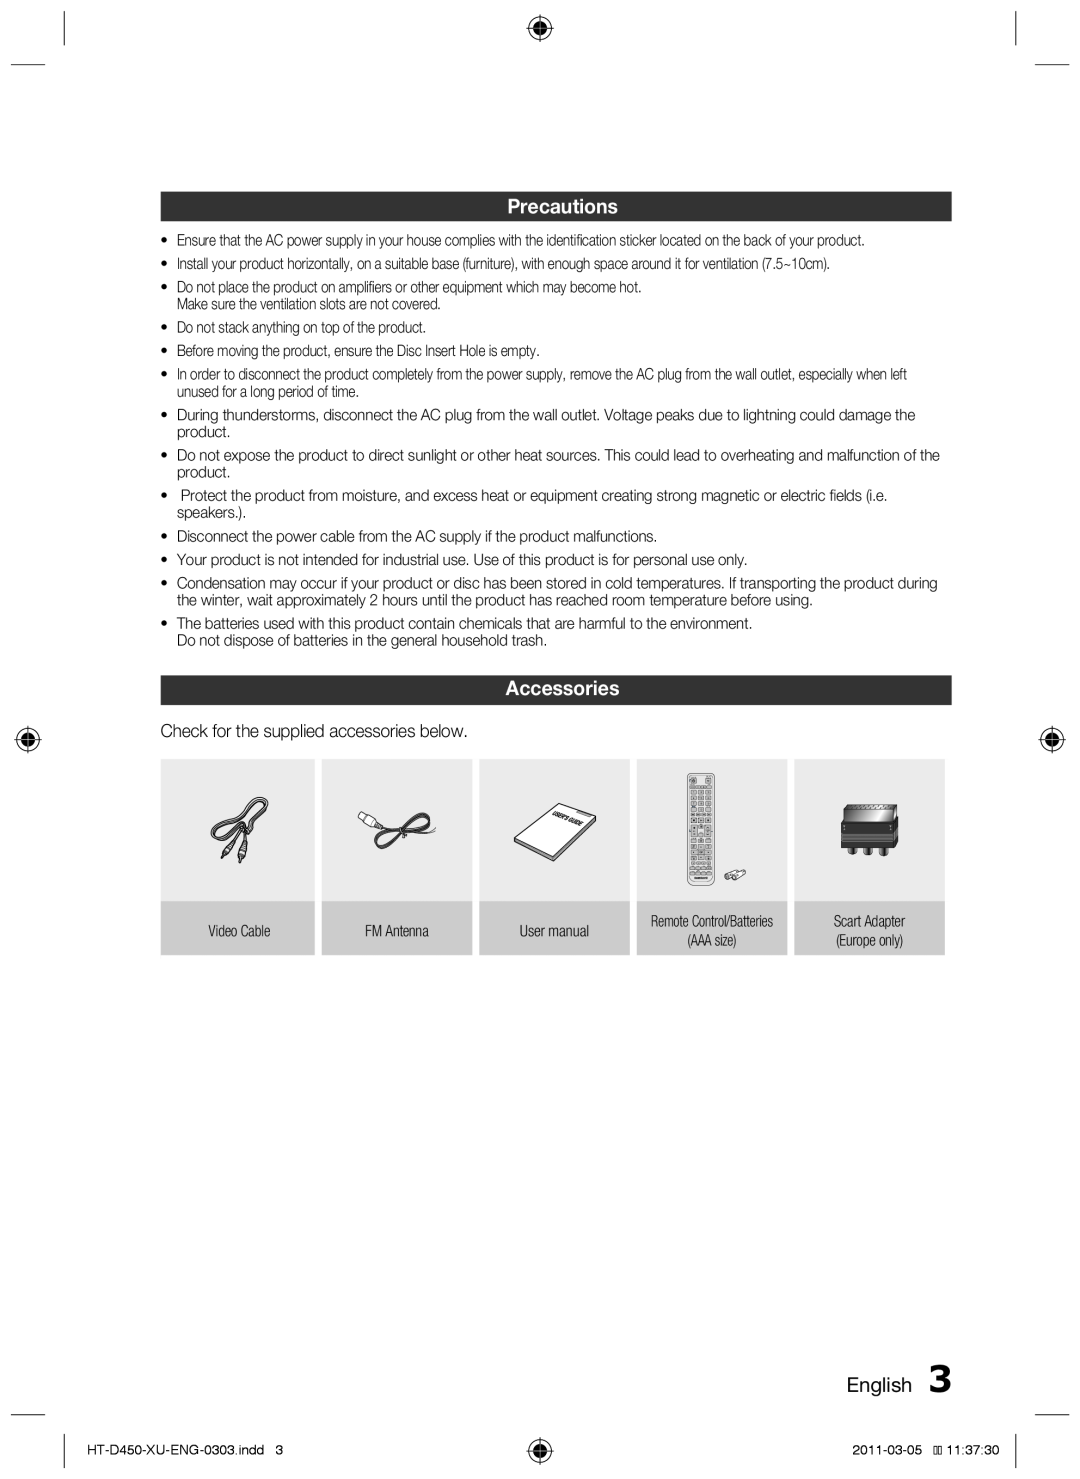 Samsung HT-D450, HT-D455, HT-D453 user manual Precautions, Accessories, English  